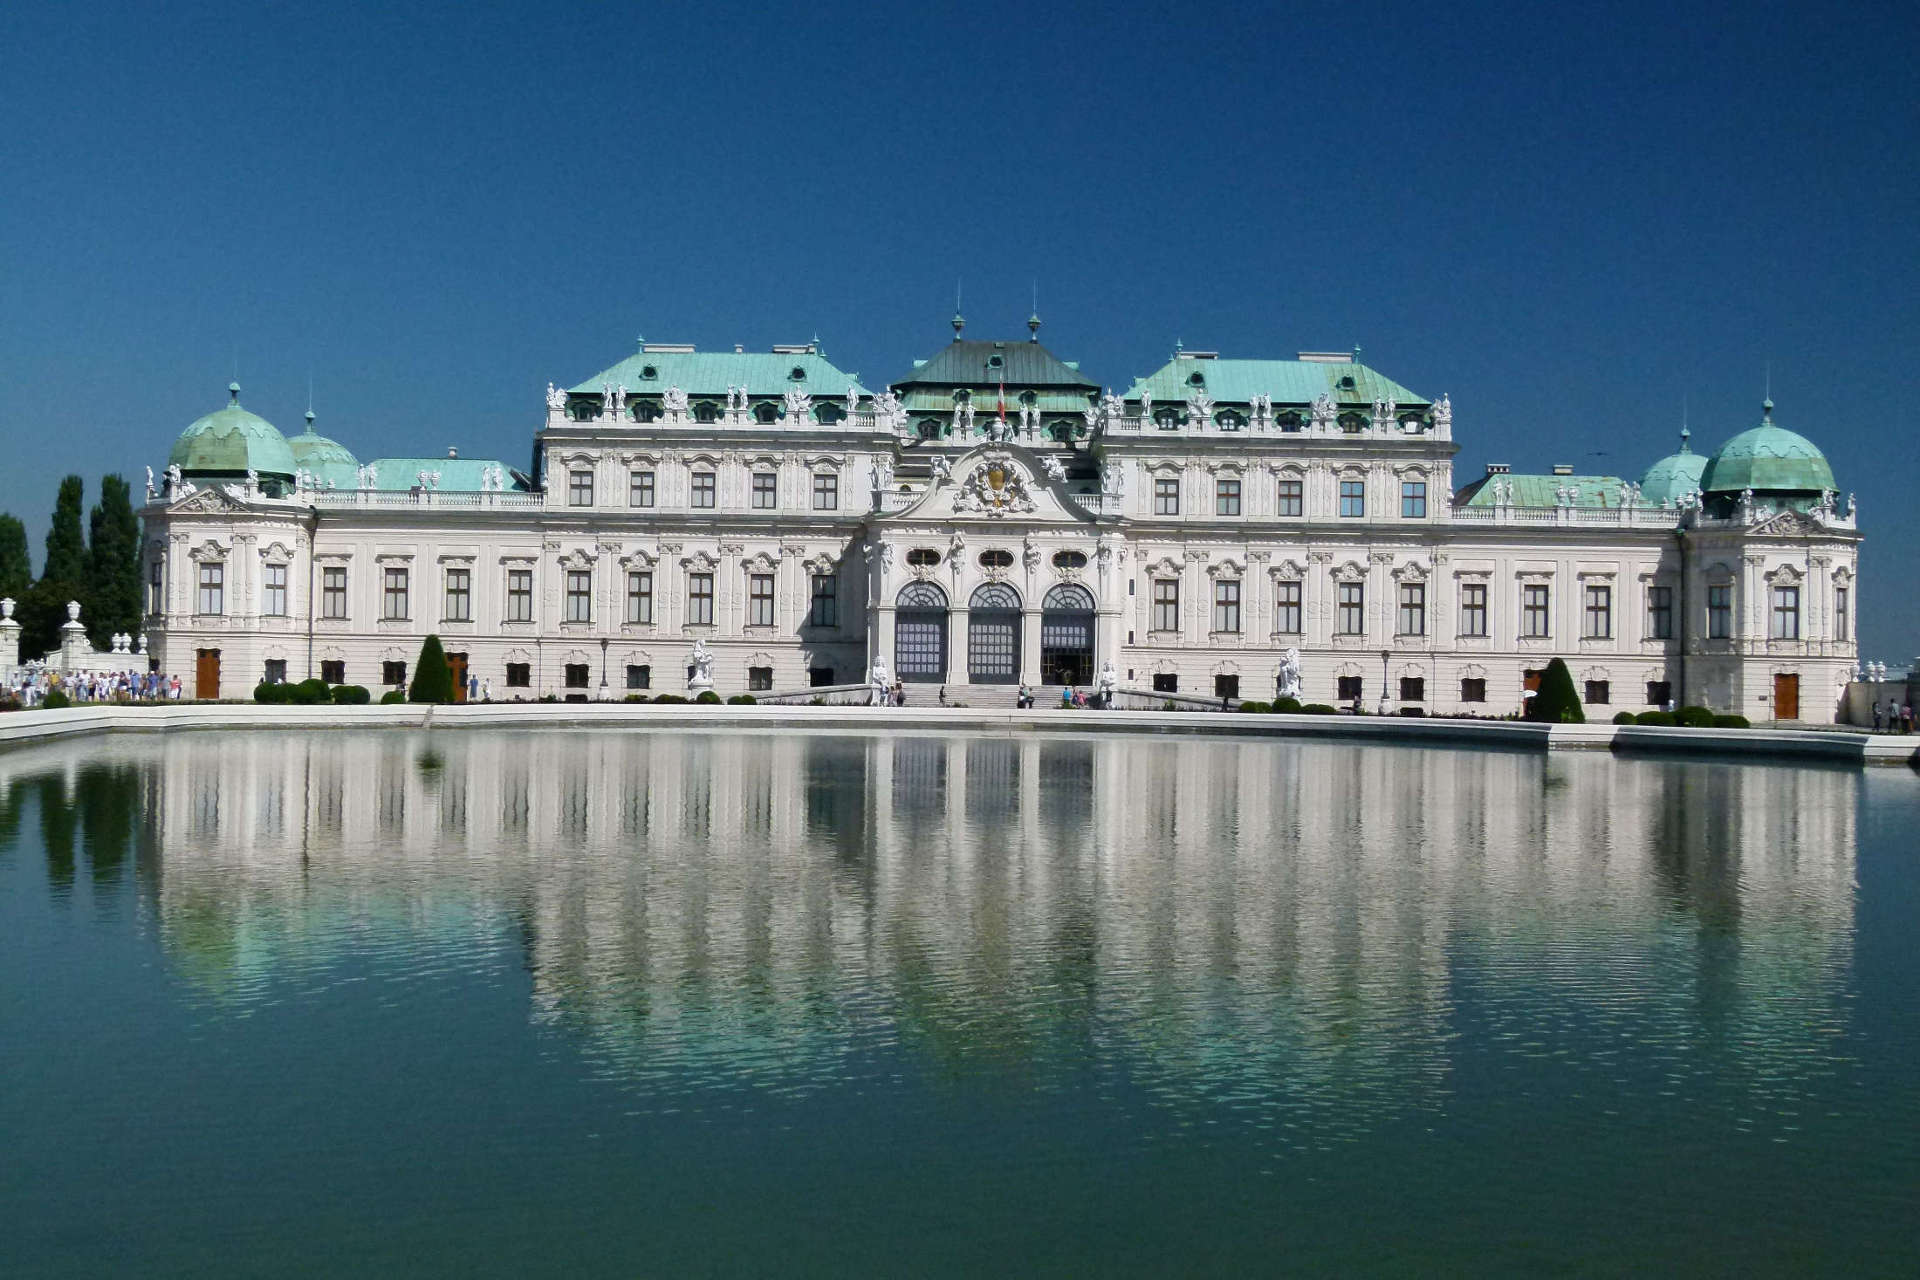 Backroads of the Habsburg Empire 1 - Vienna, Belvedere Castle